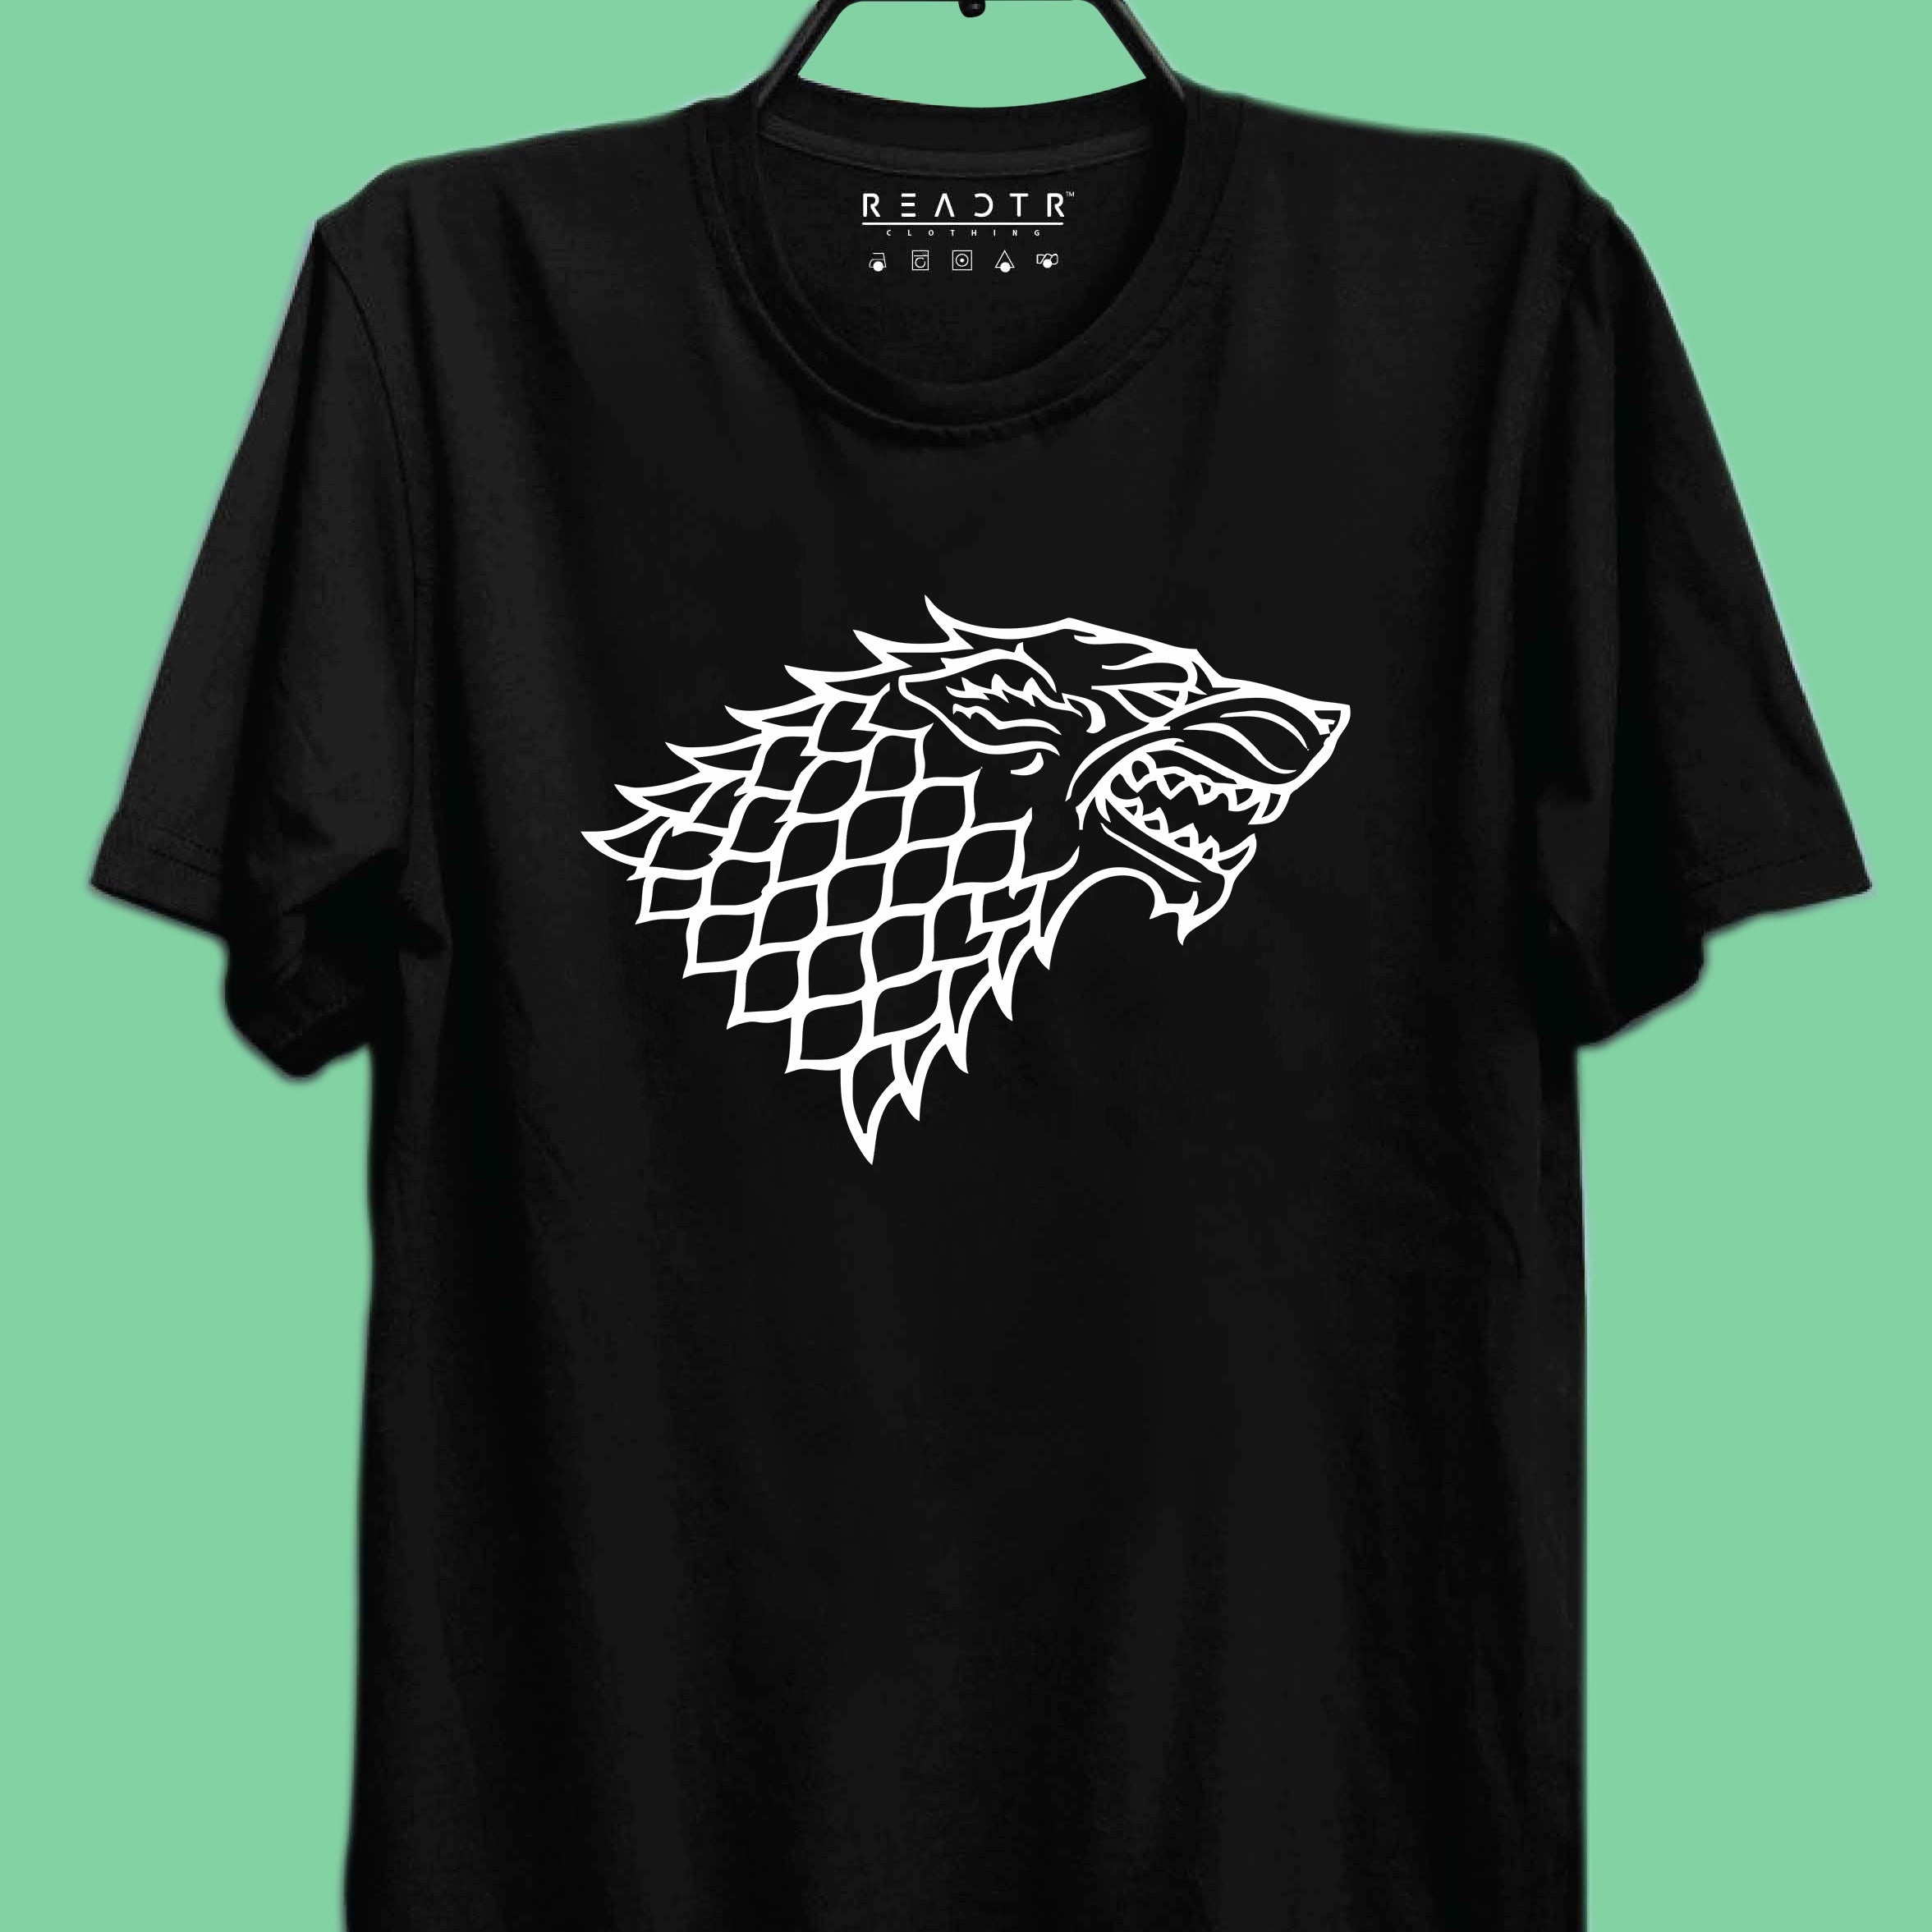 House Of Stark Reactr Tshirts For Men - Eyewearlabs